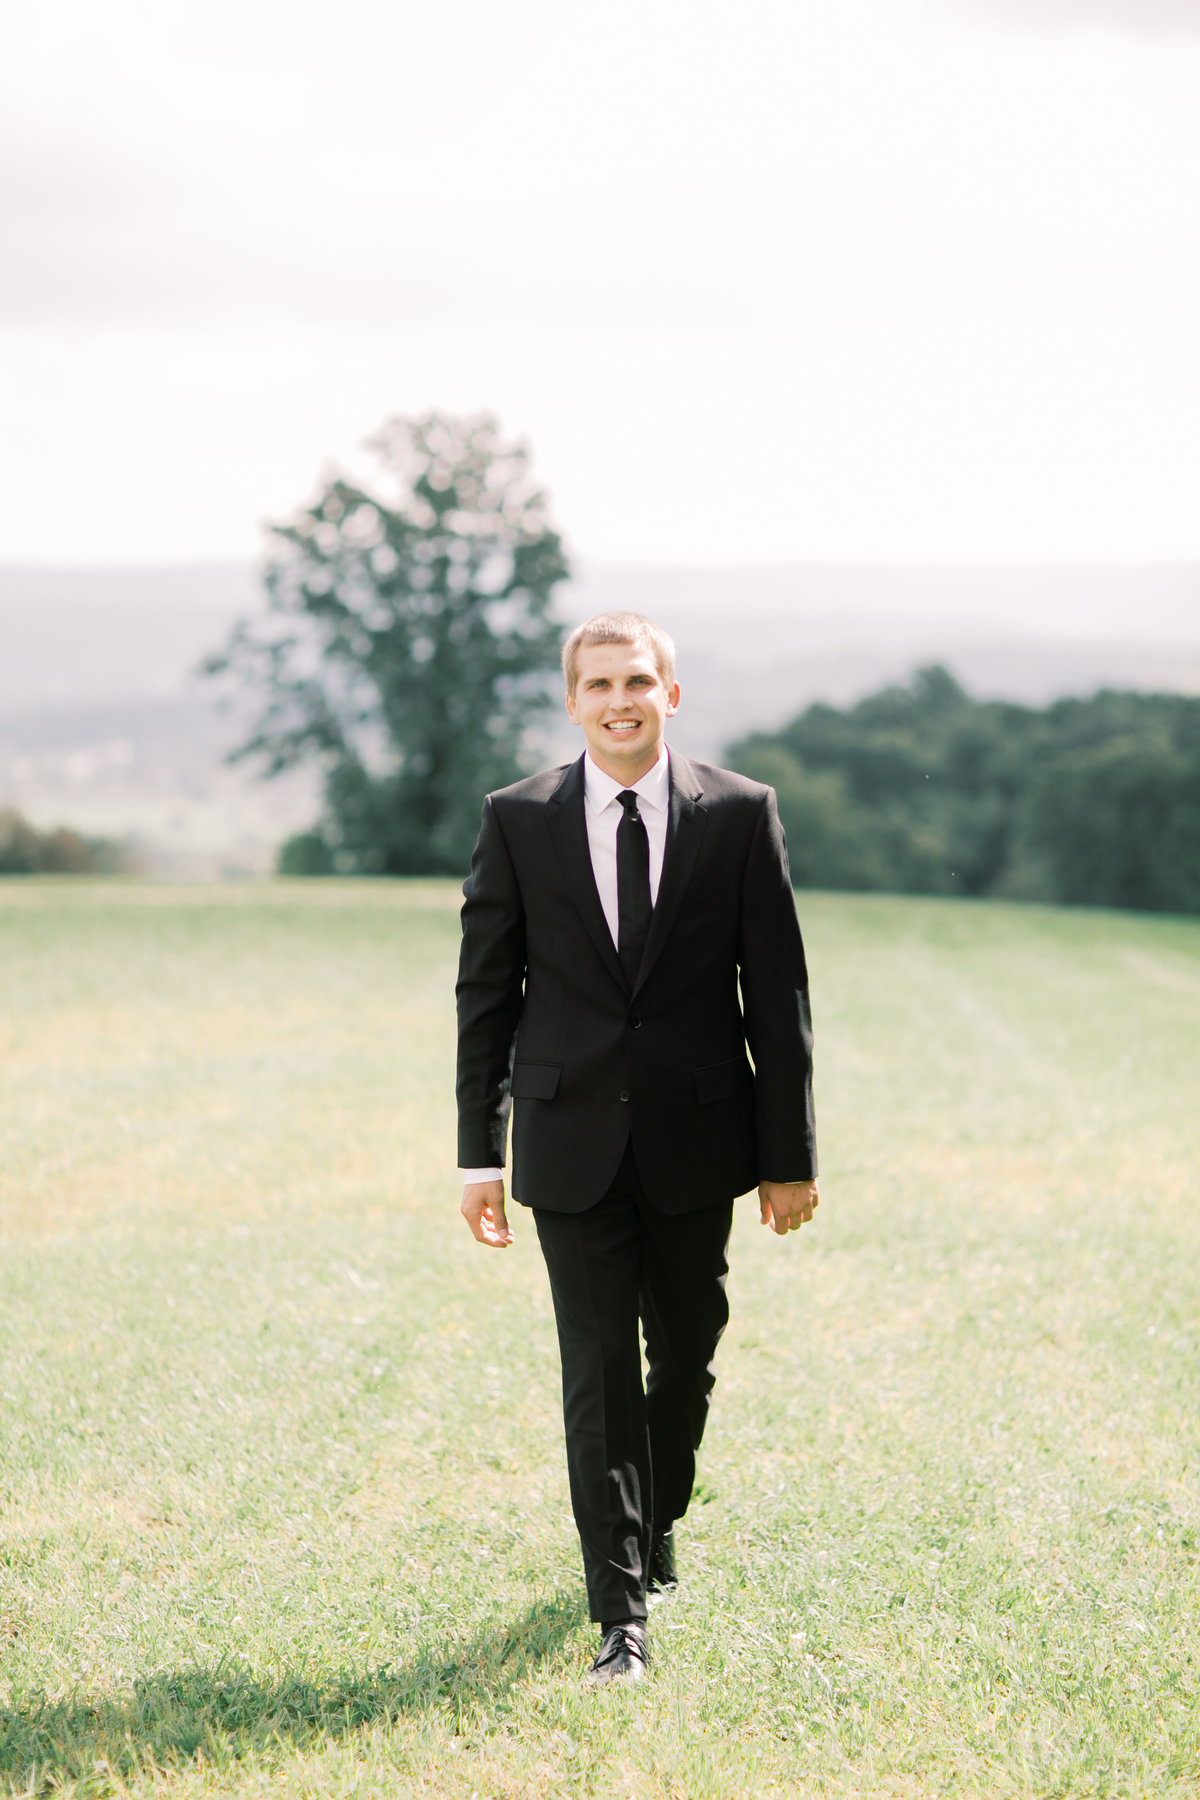 groom walking through grassy field